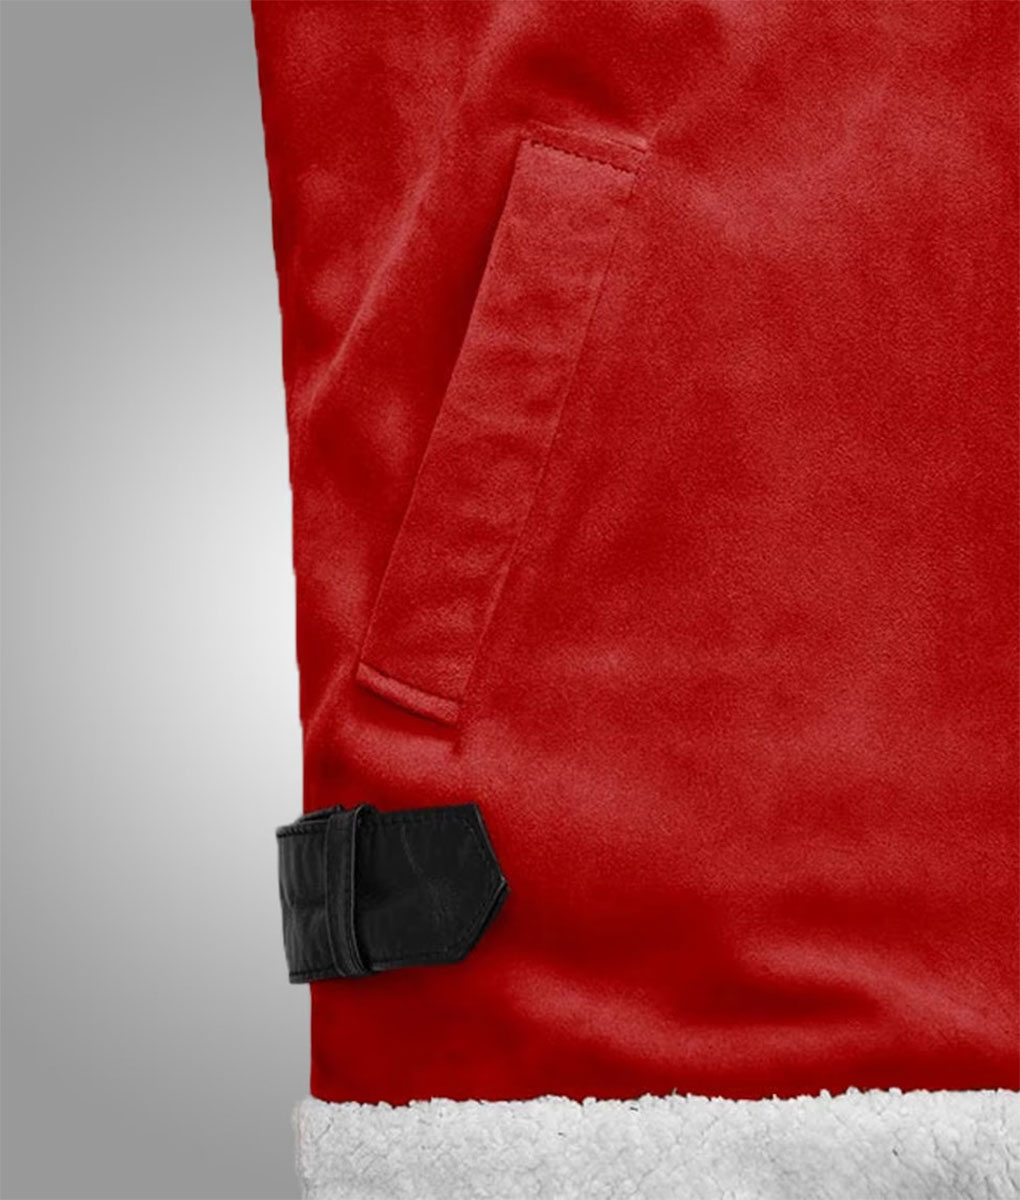 Spirited Ryan Reynolds Red Shearling Jacket (2)